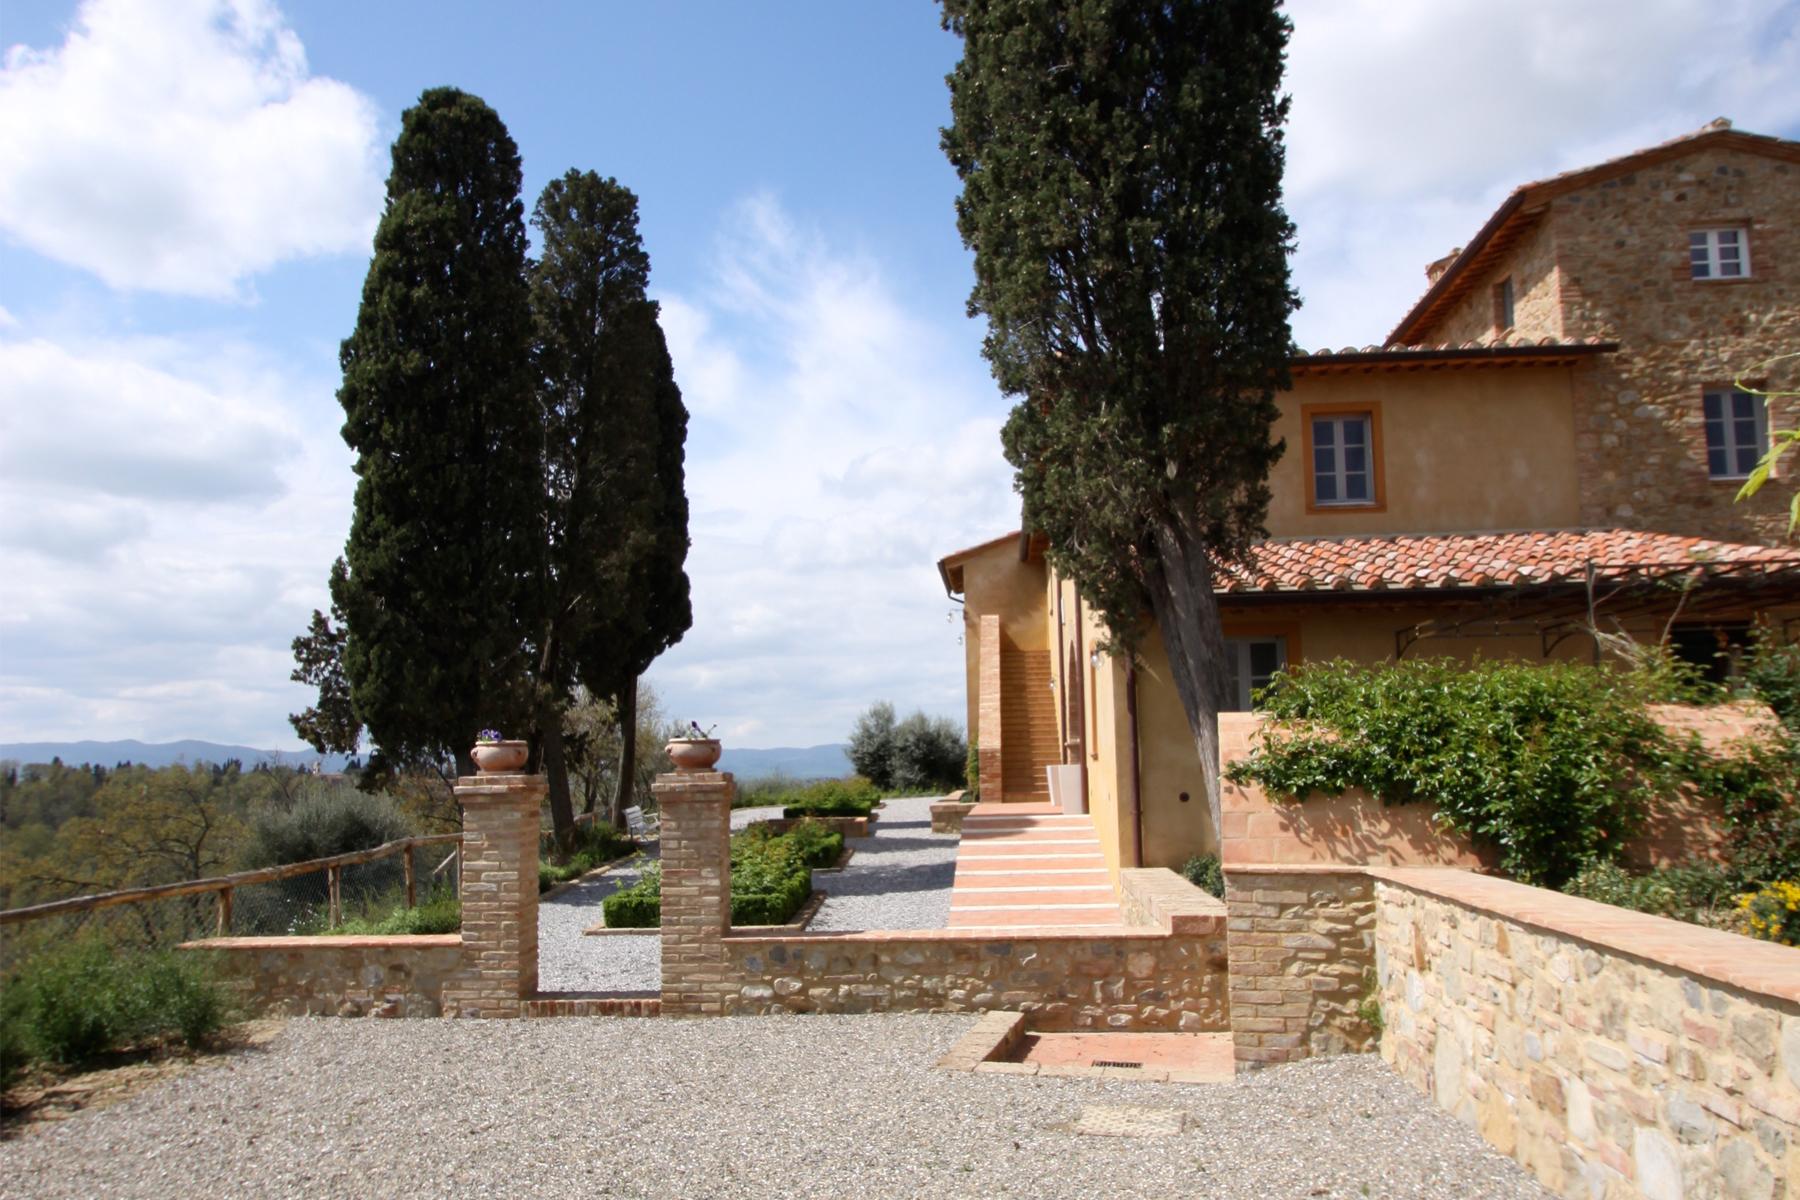 Wonderful Villa in the Tuscan countryside - 5